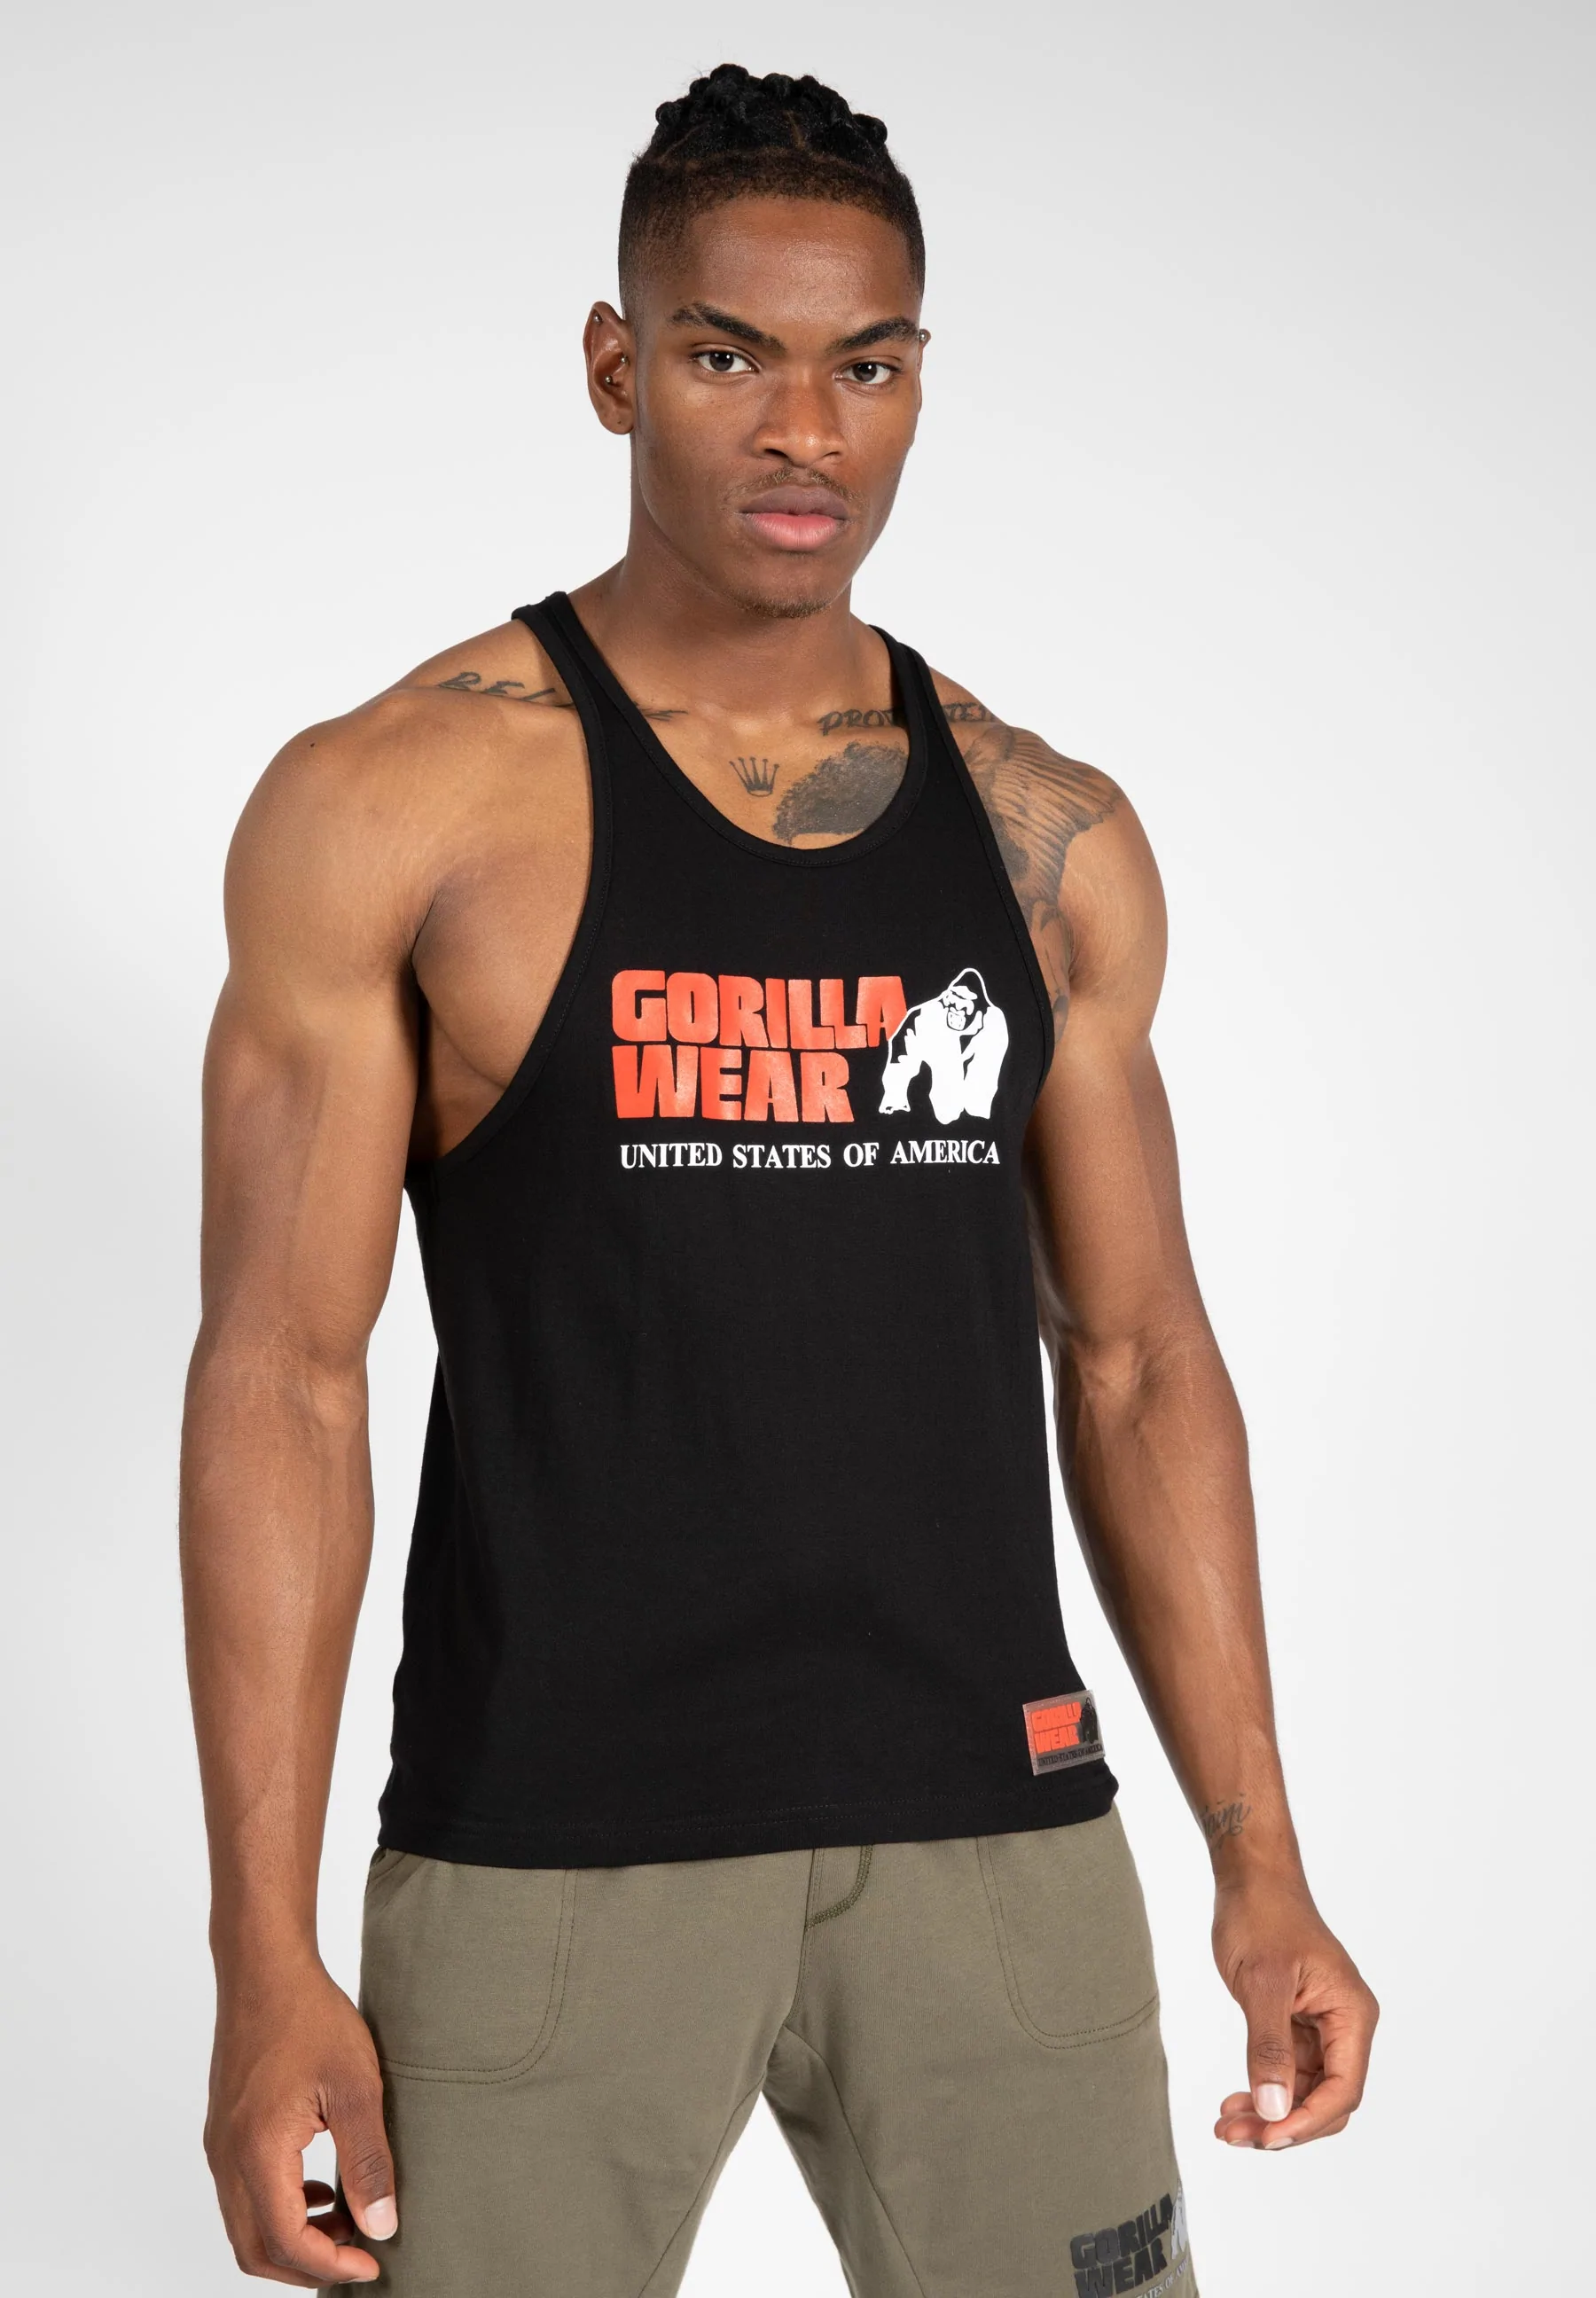 Gorilla Wear Classic Work Out Top Bodybuilding Rag Top Sportswear T-Shirt  Gym